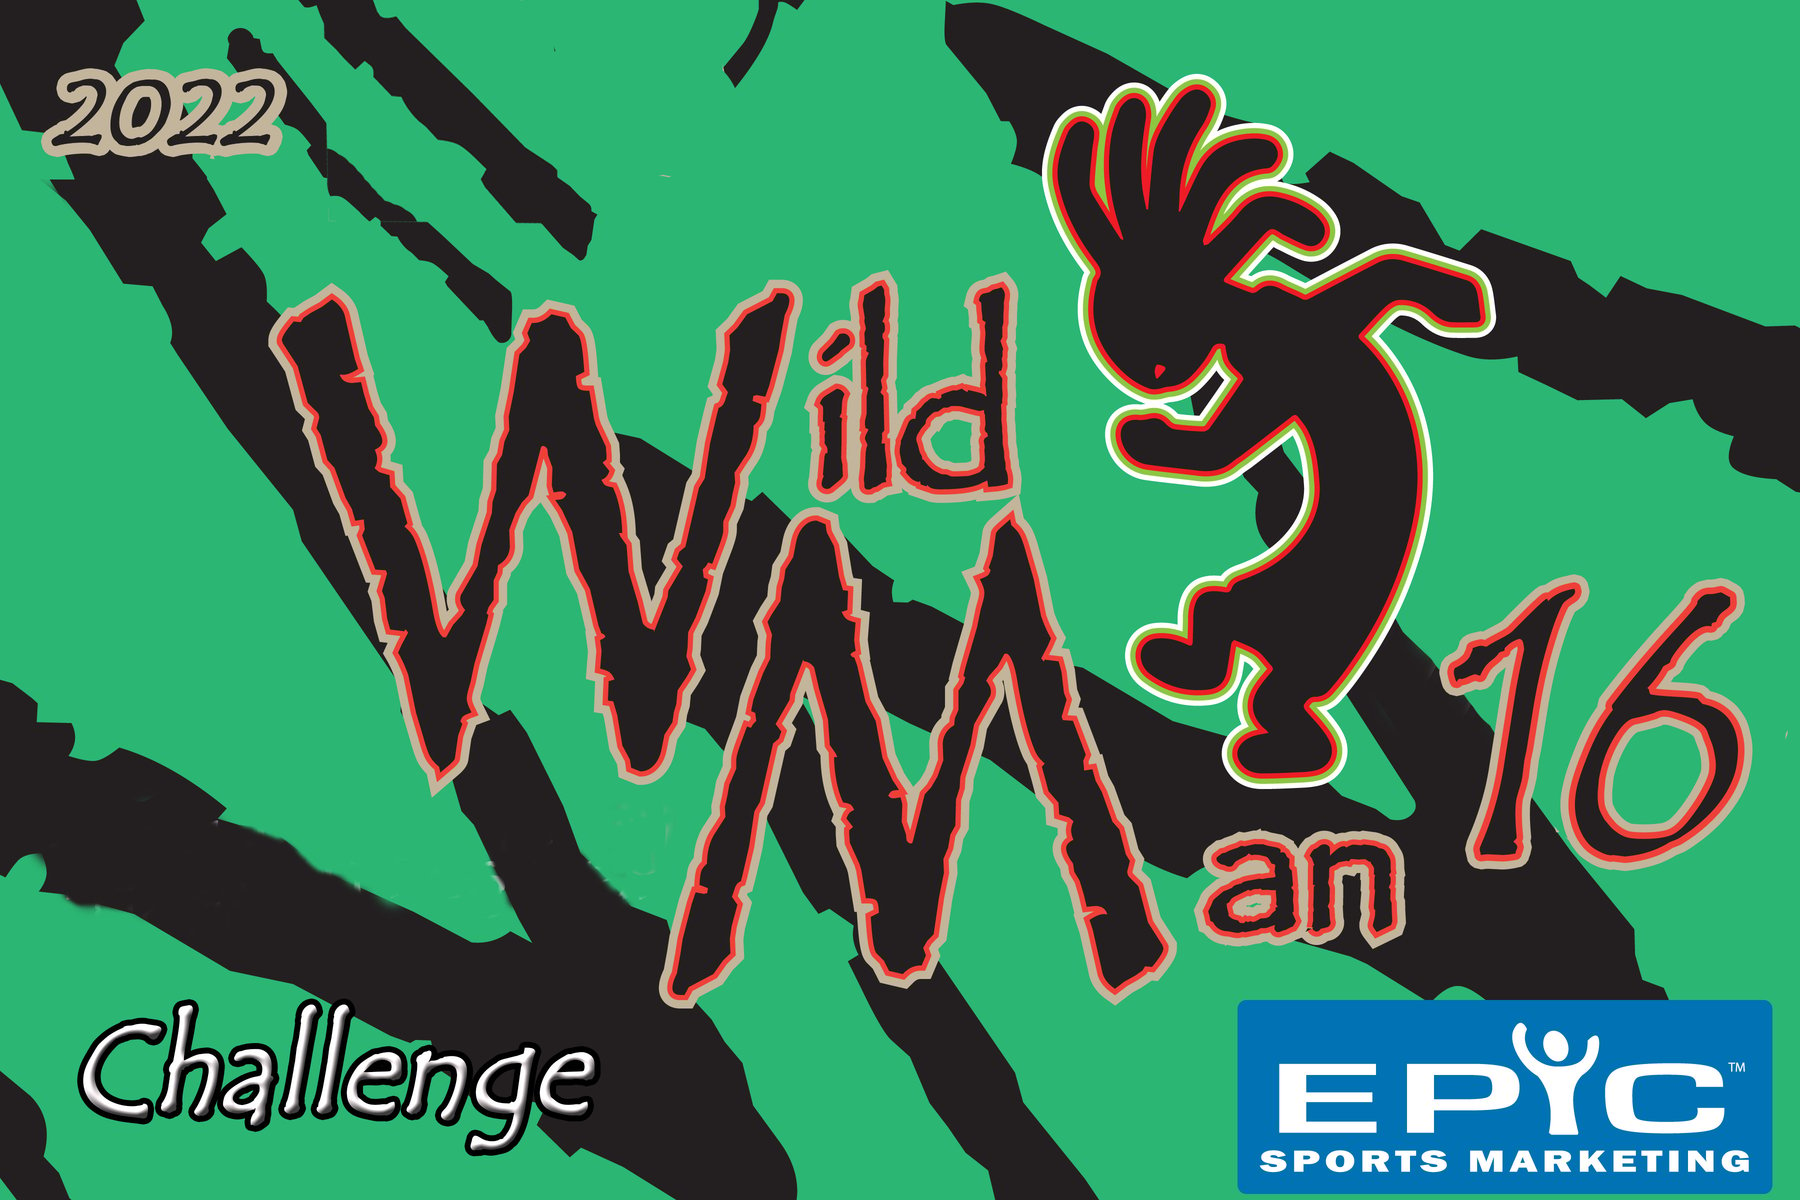 Wildman Challenge